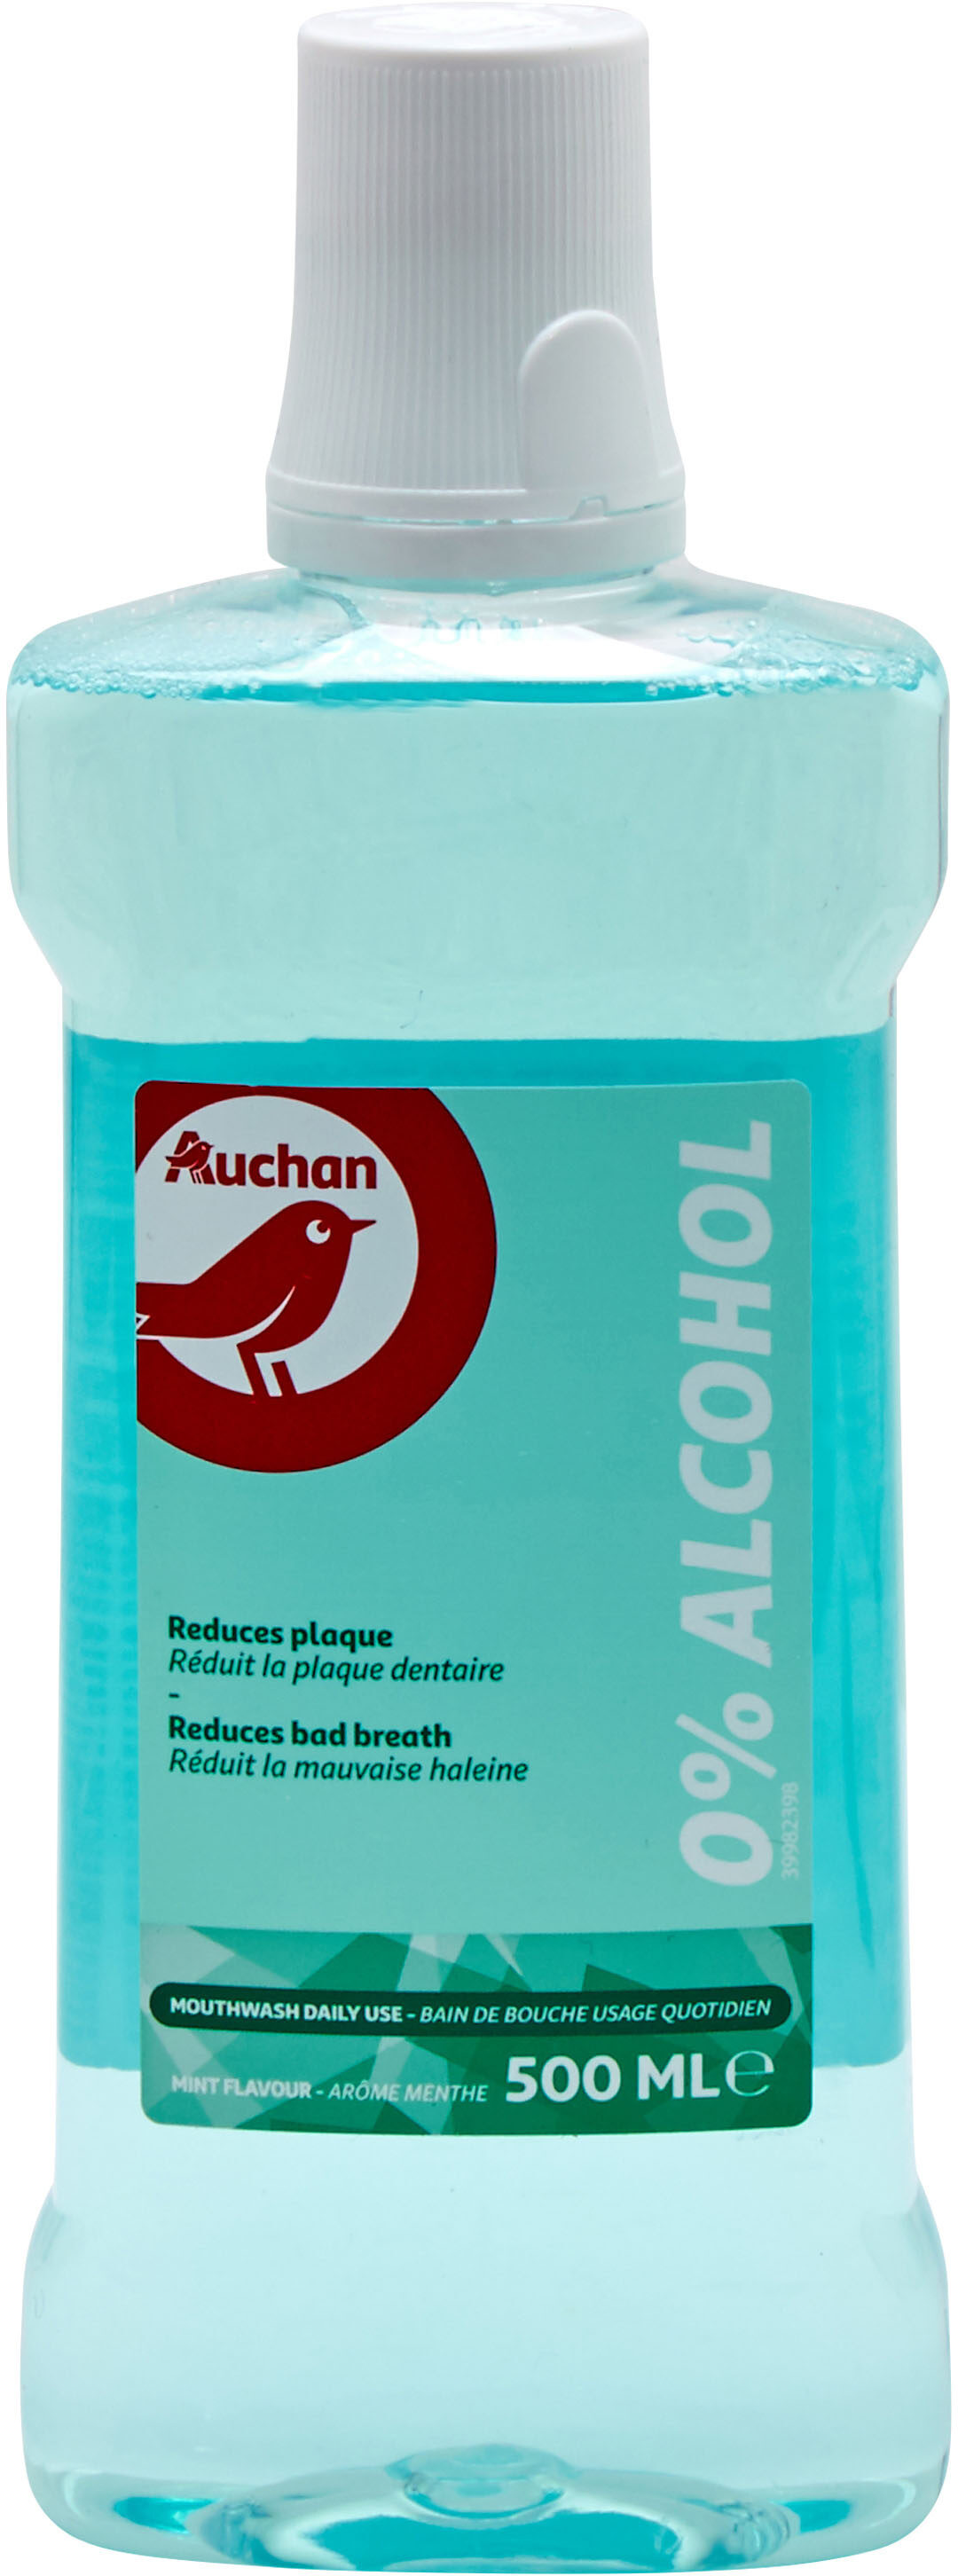 Auchan - bain de bouche - fraicheur 0% alcool - 500ml - Продукт - fr